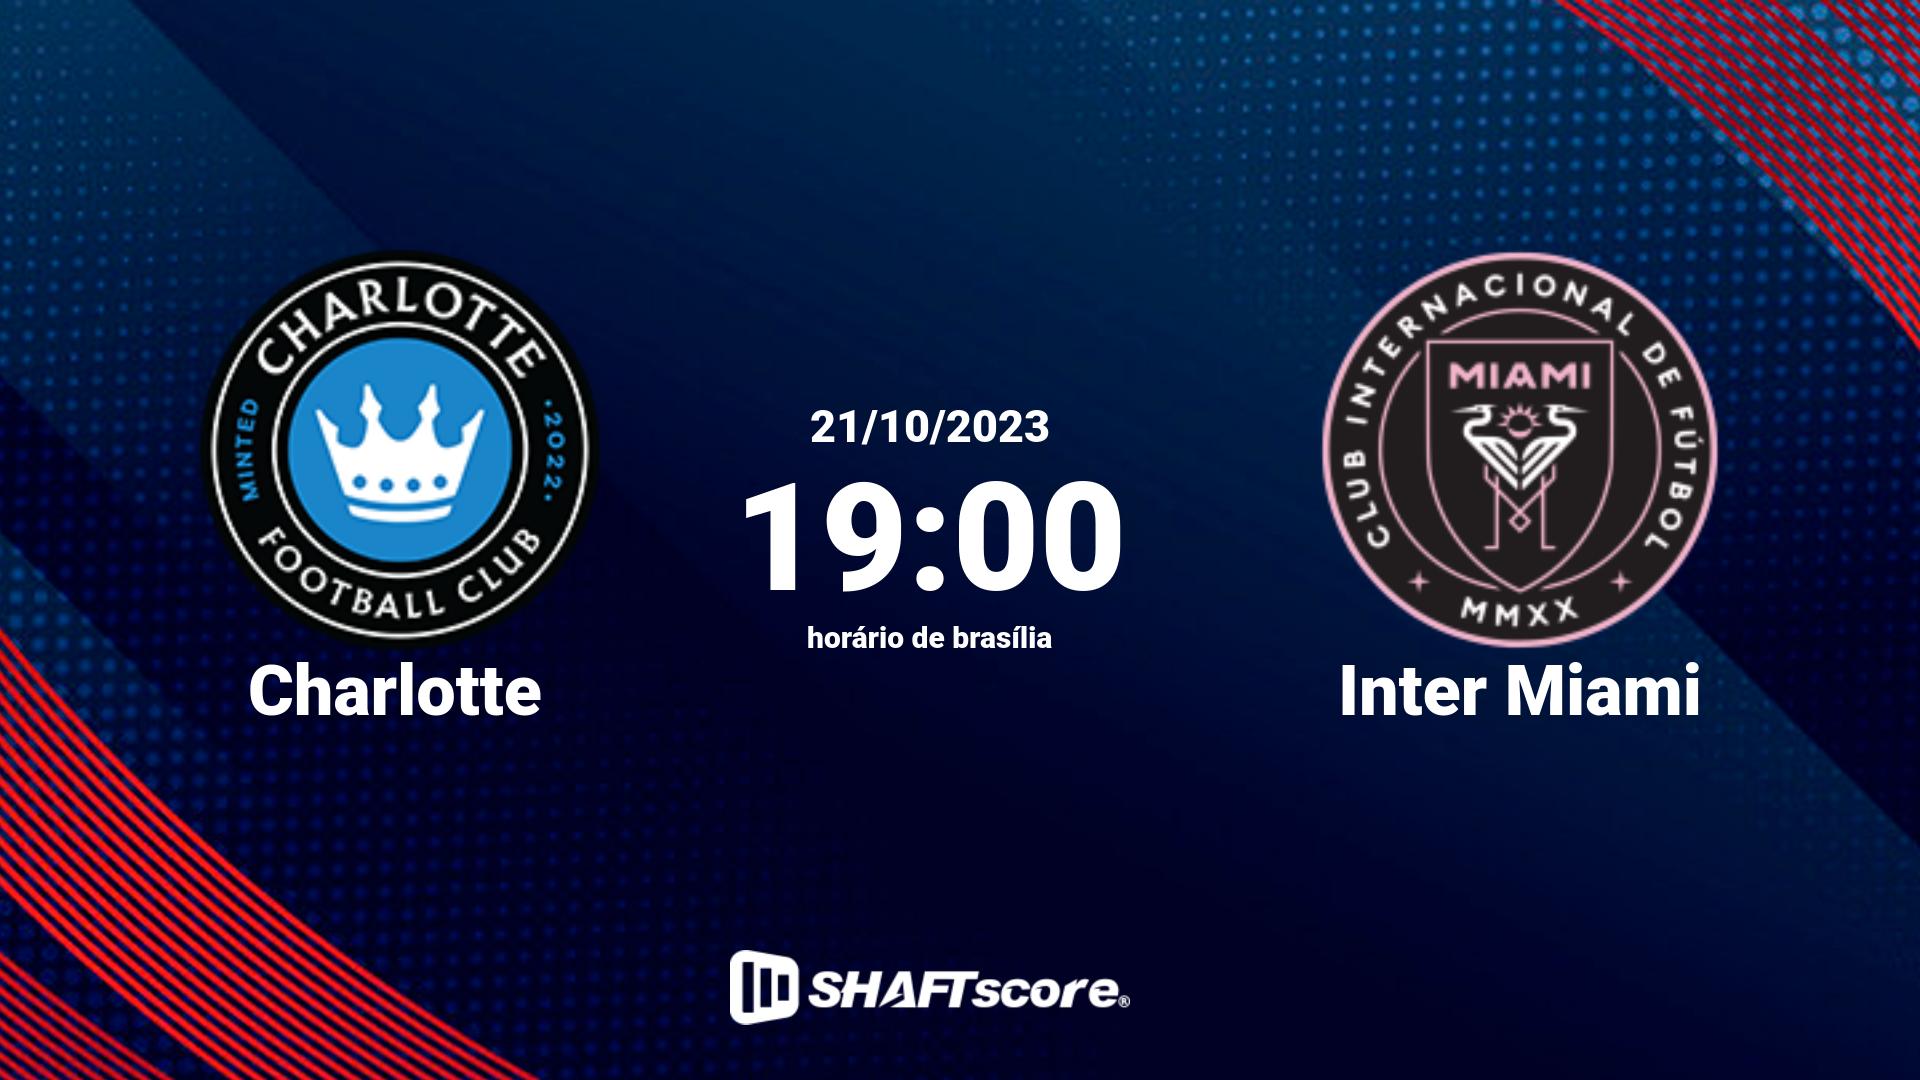 Estatísticas do jogo Charlotte vs Inter Miami 21.10 19:00